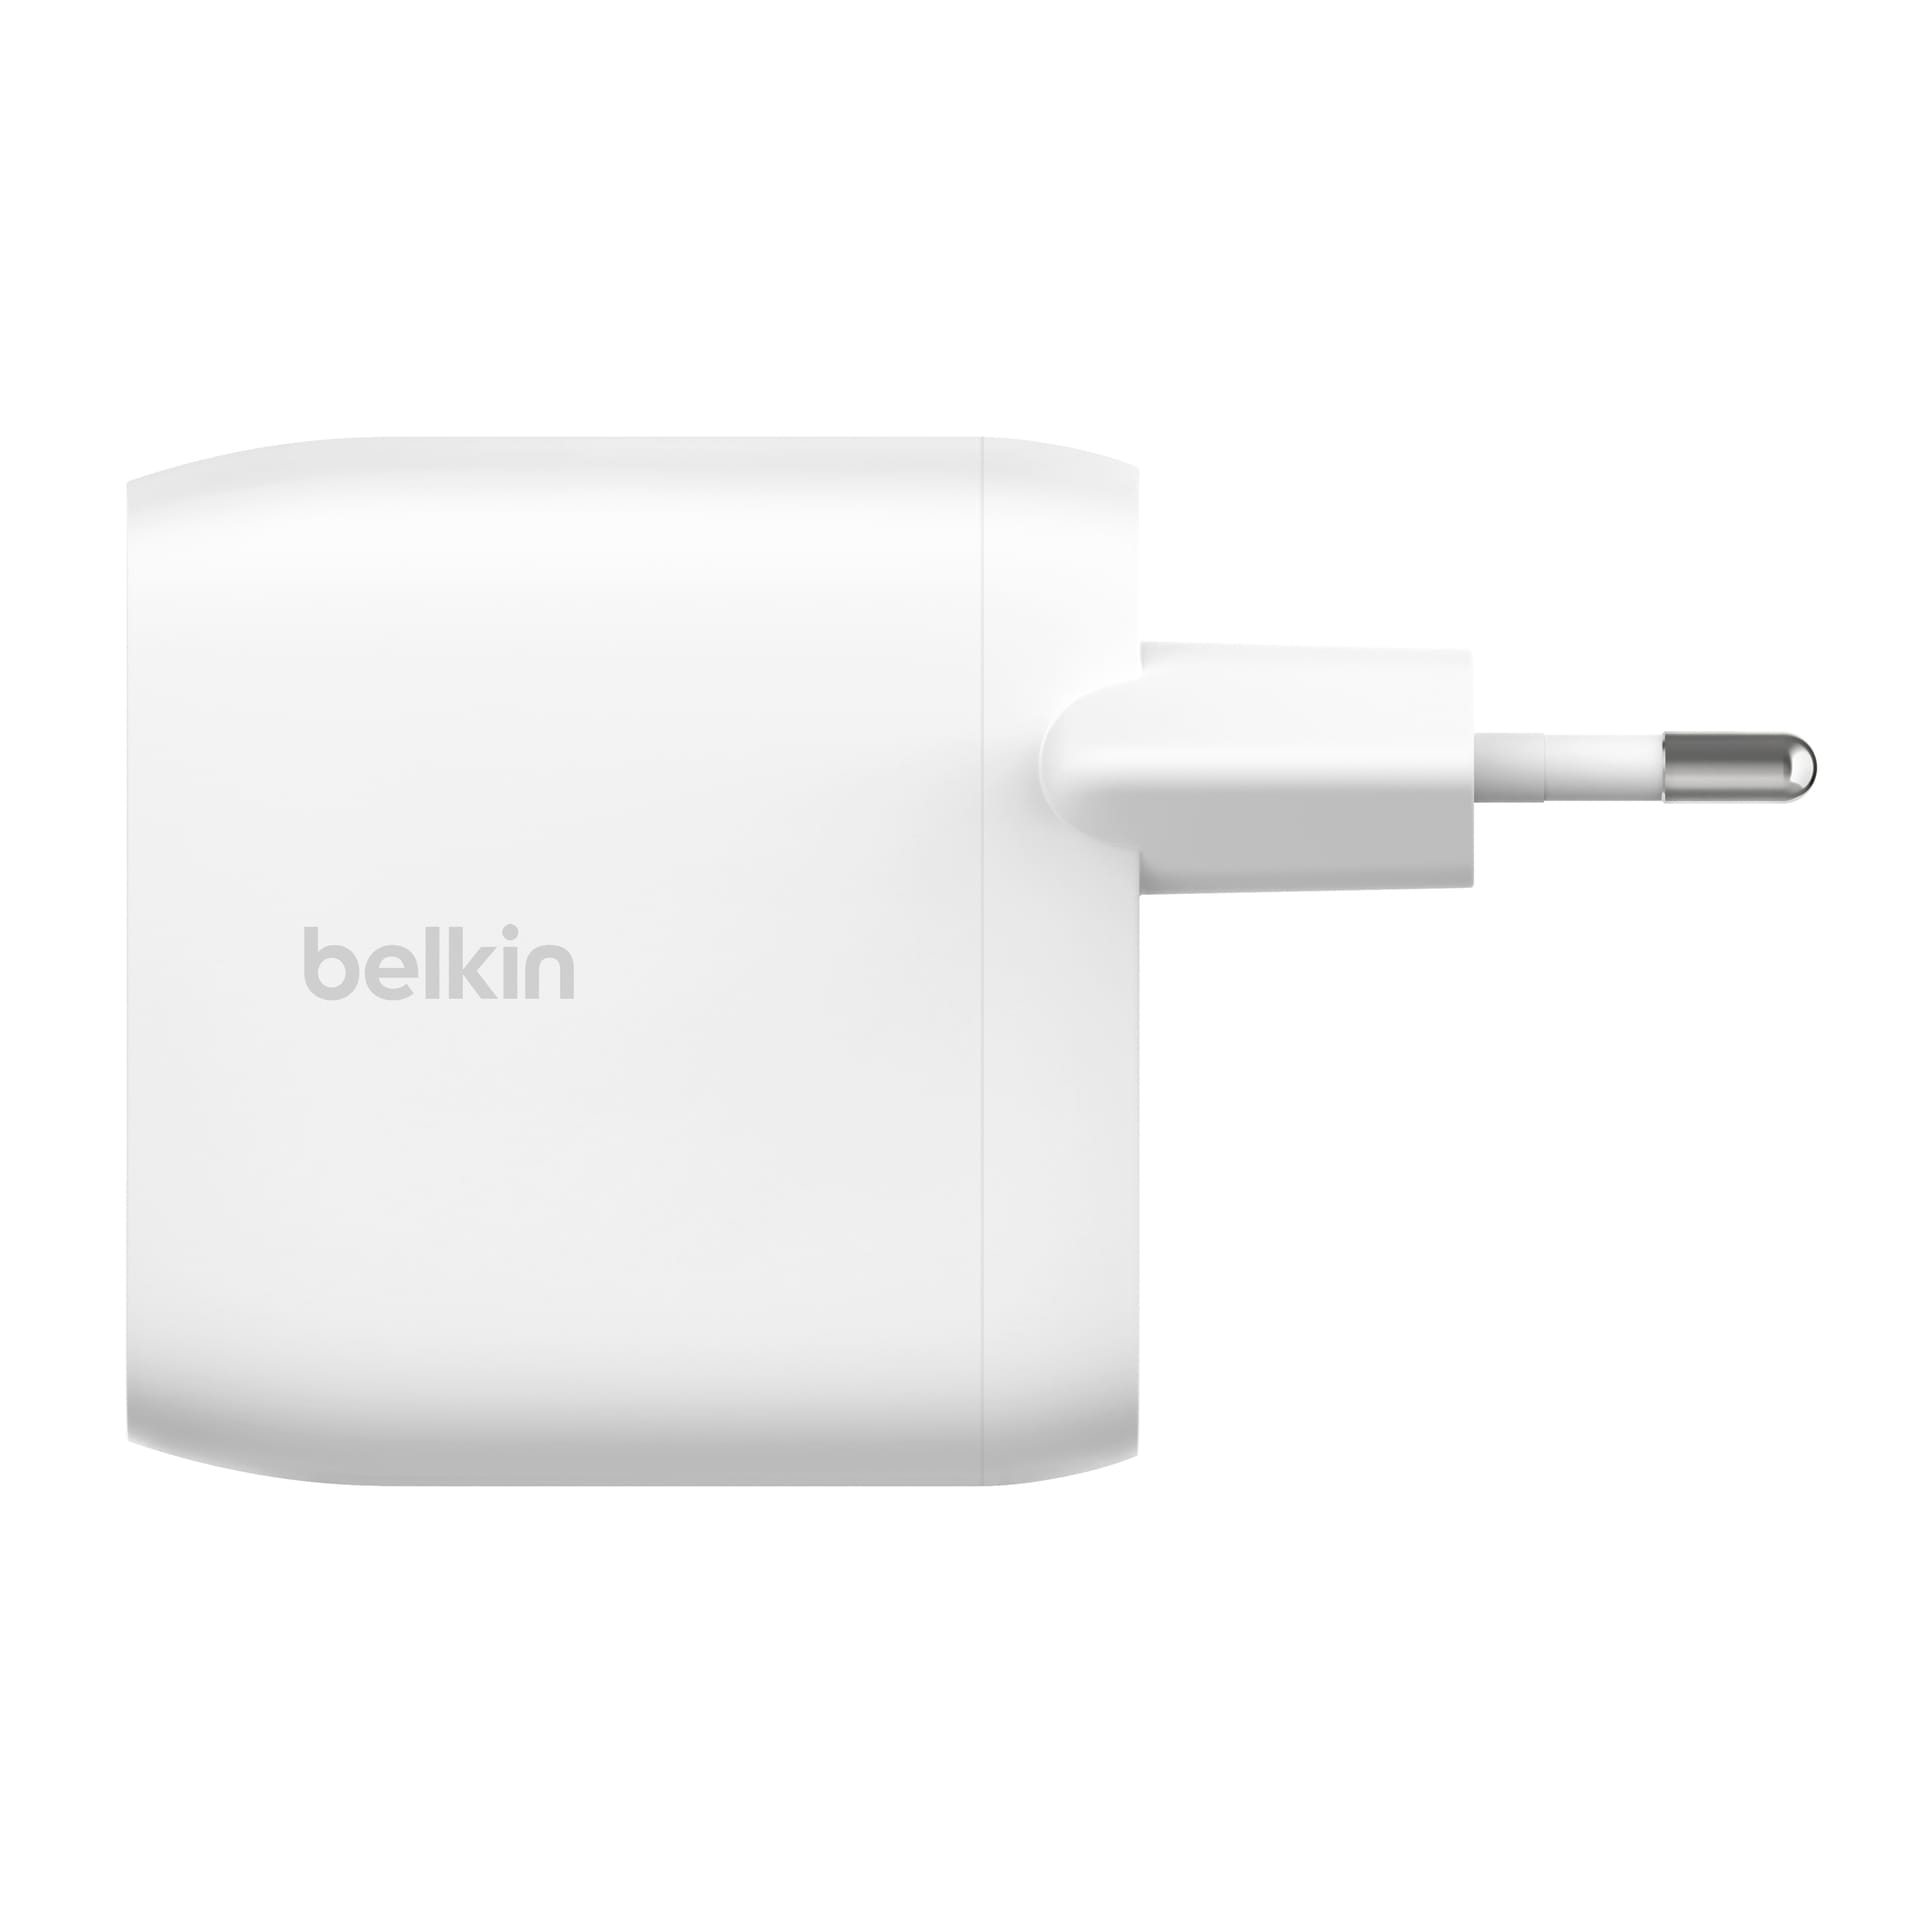 Belkin USB-Ladegerät »BoostCharge Pro 60 Watt Dual USB-C Ladegerät mit 2x USB-C Anschlüssen«, (Netzteil für Laptops, Tablets, Smartphones)